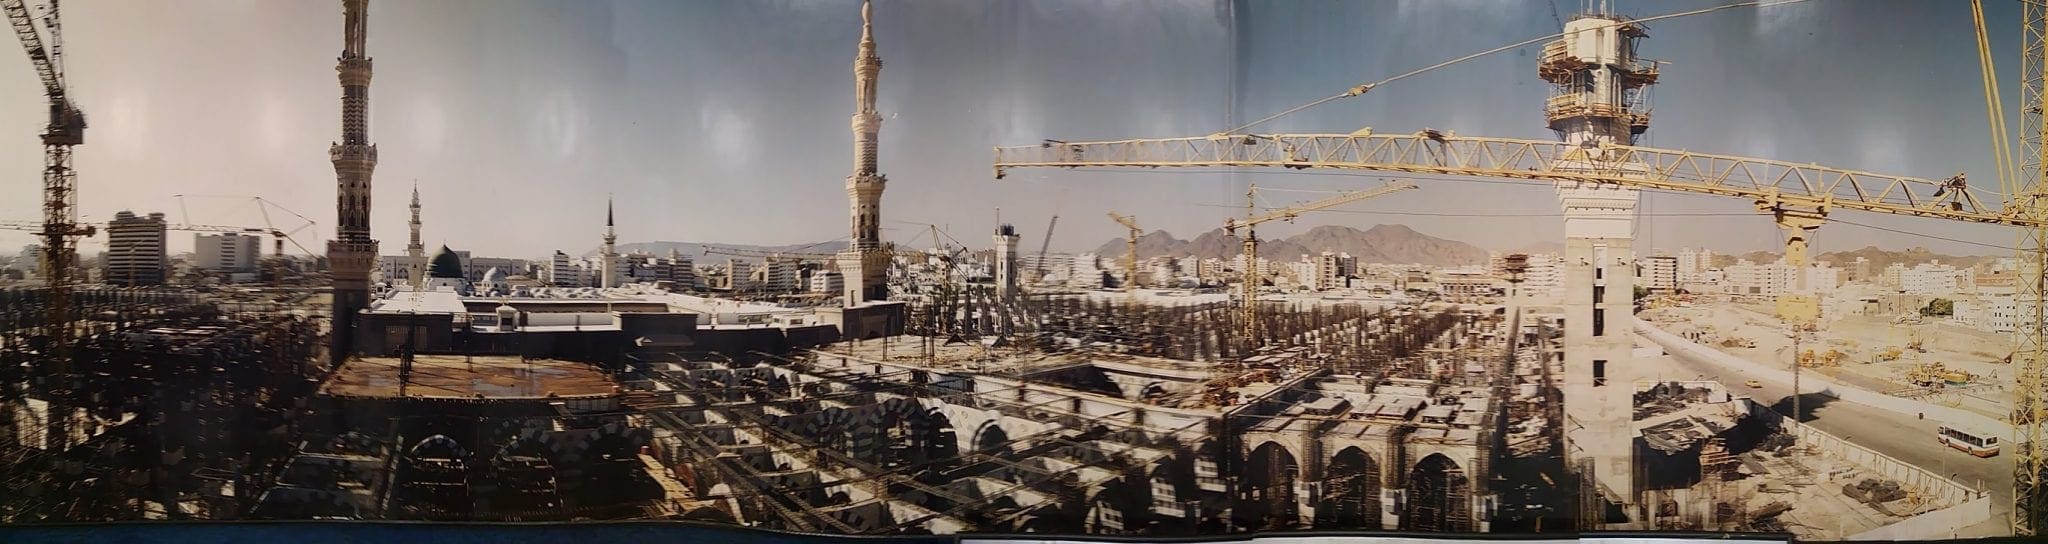 Pembangunan Masjid Nabawi, Saudi Arabia